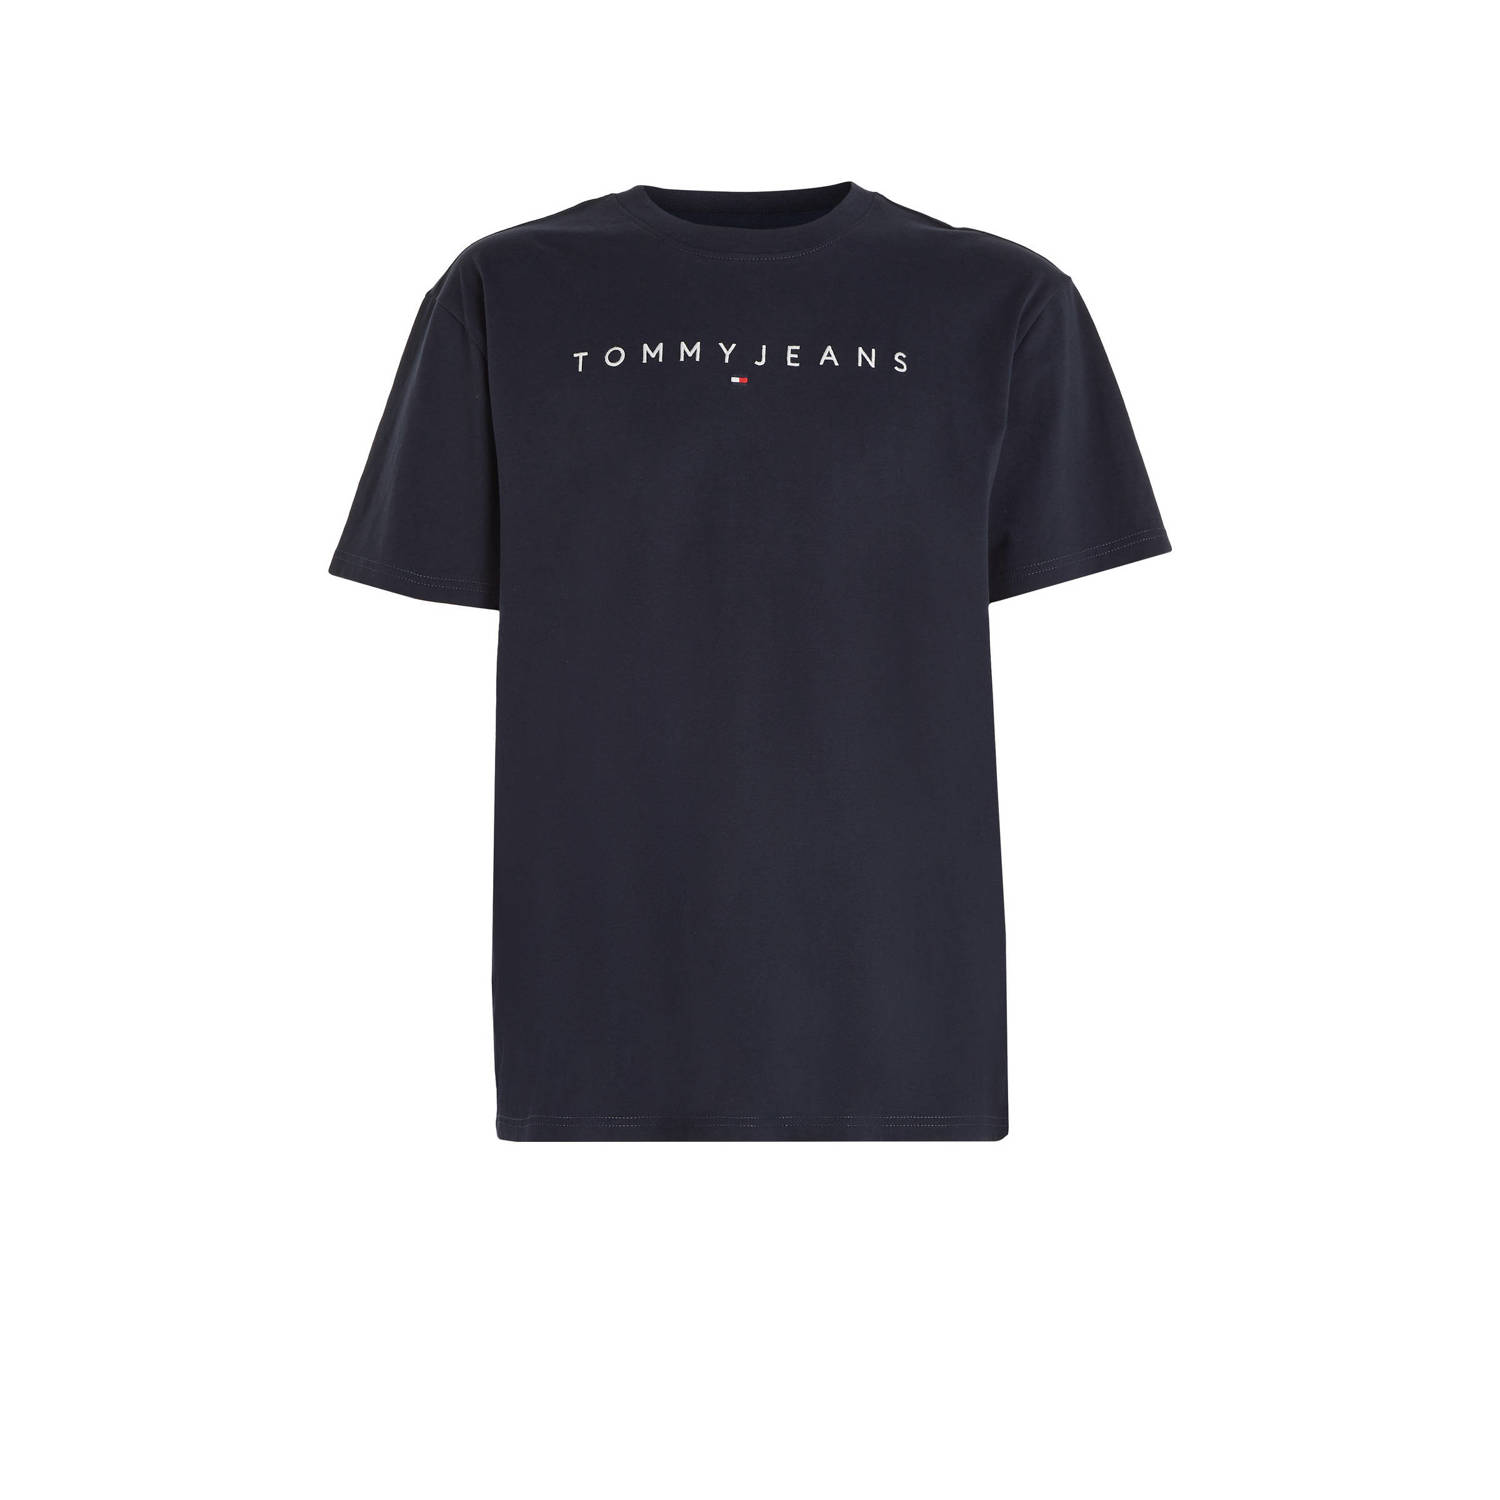 Tommy Jeans T-shirt met printopdruk dark night navy